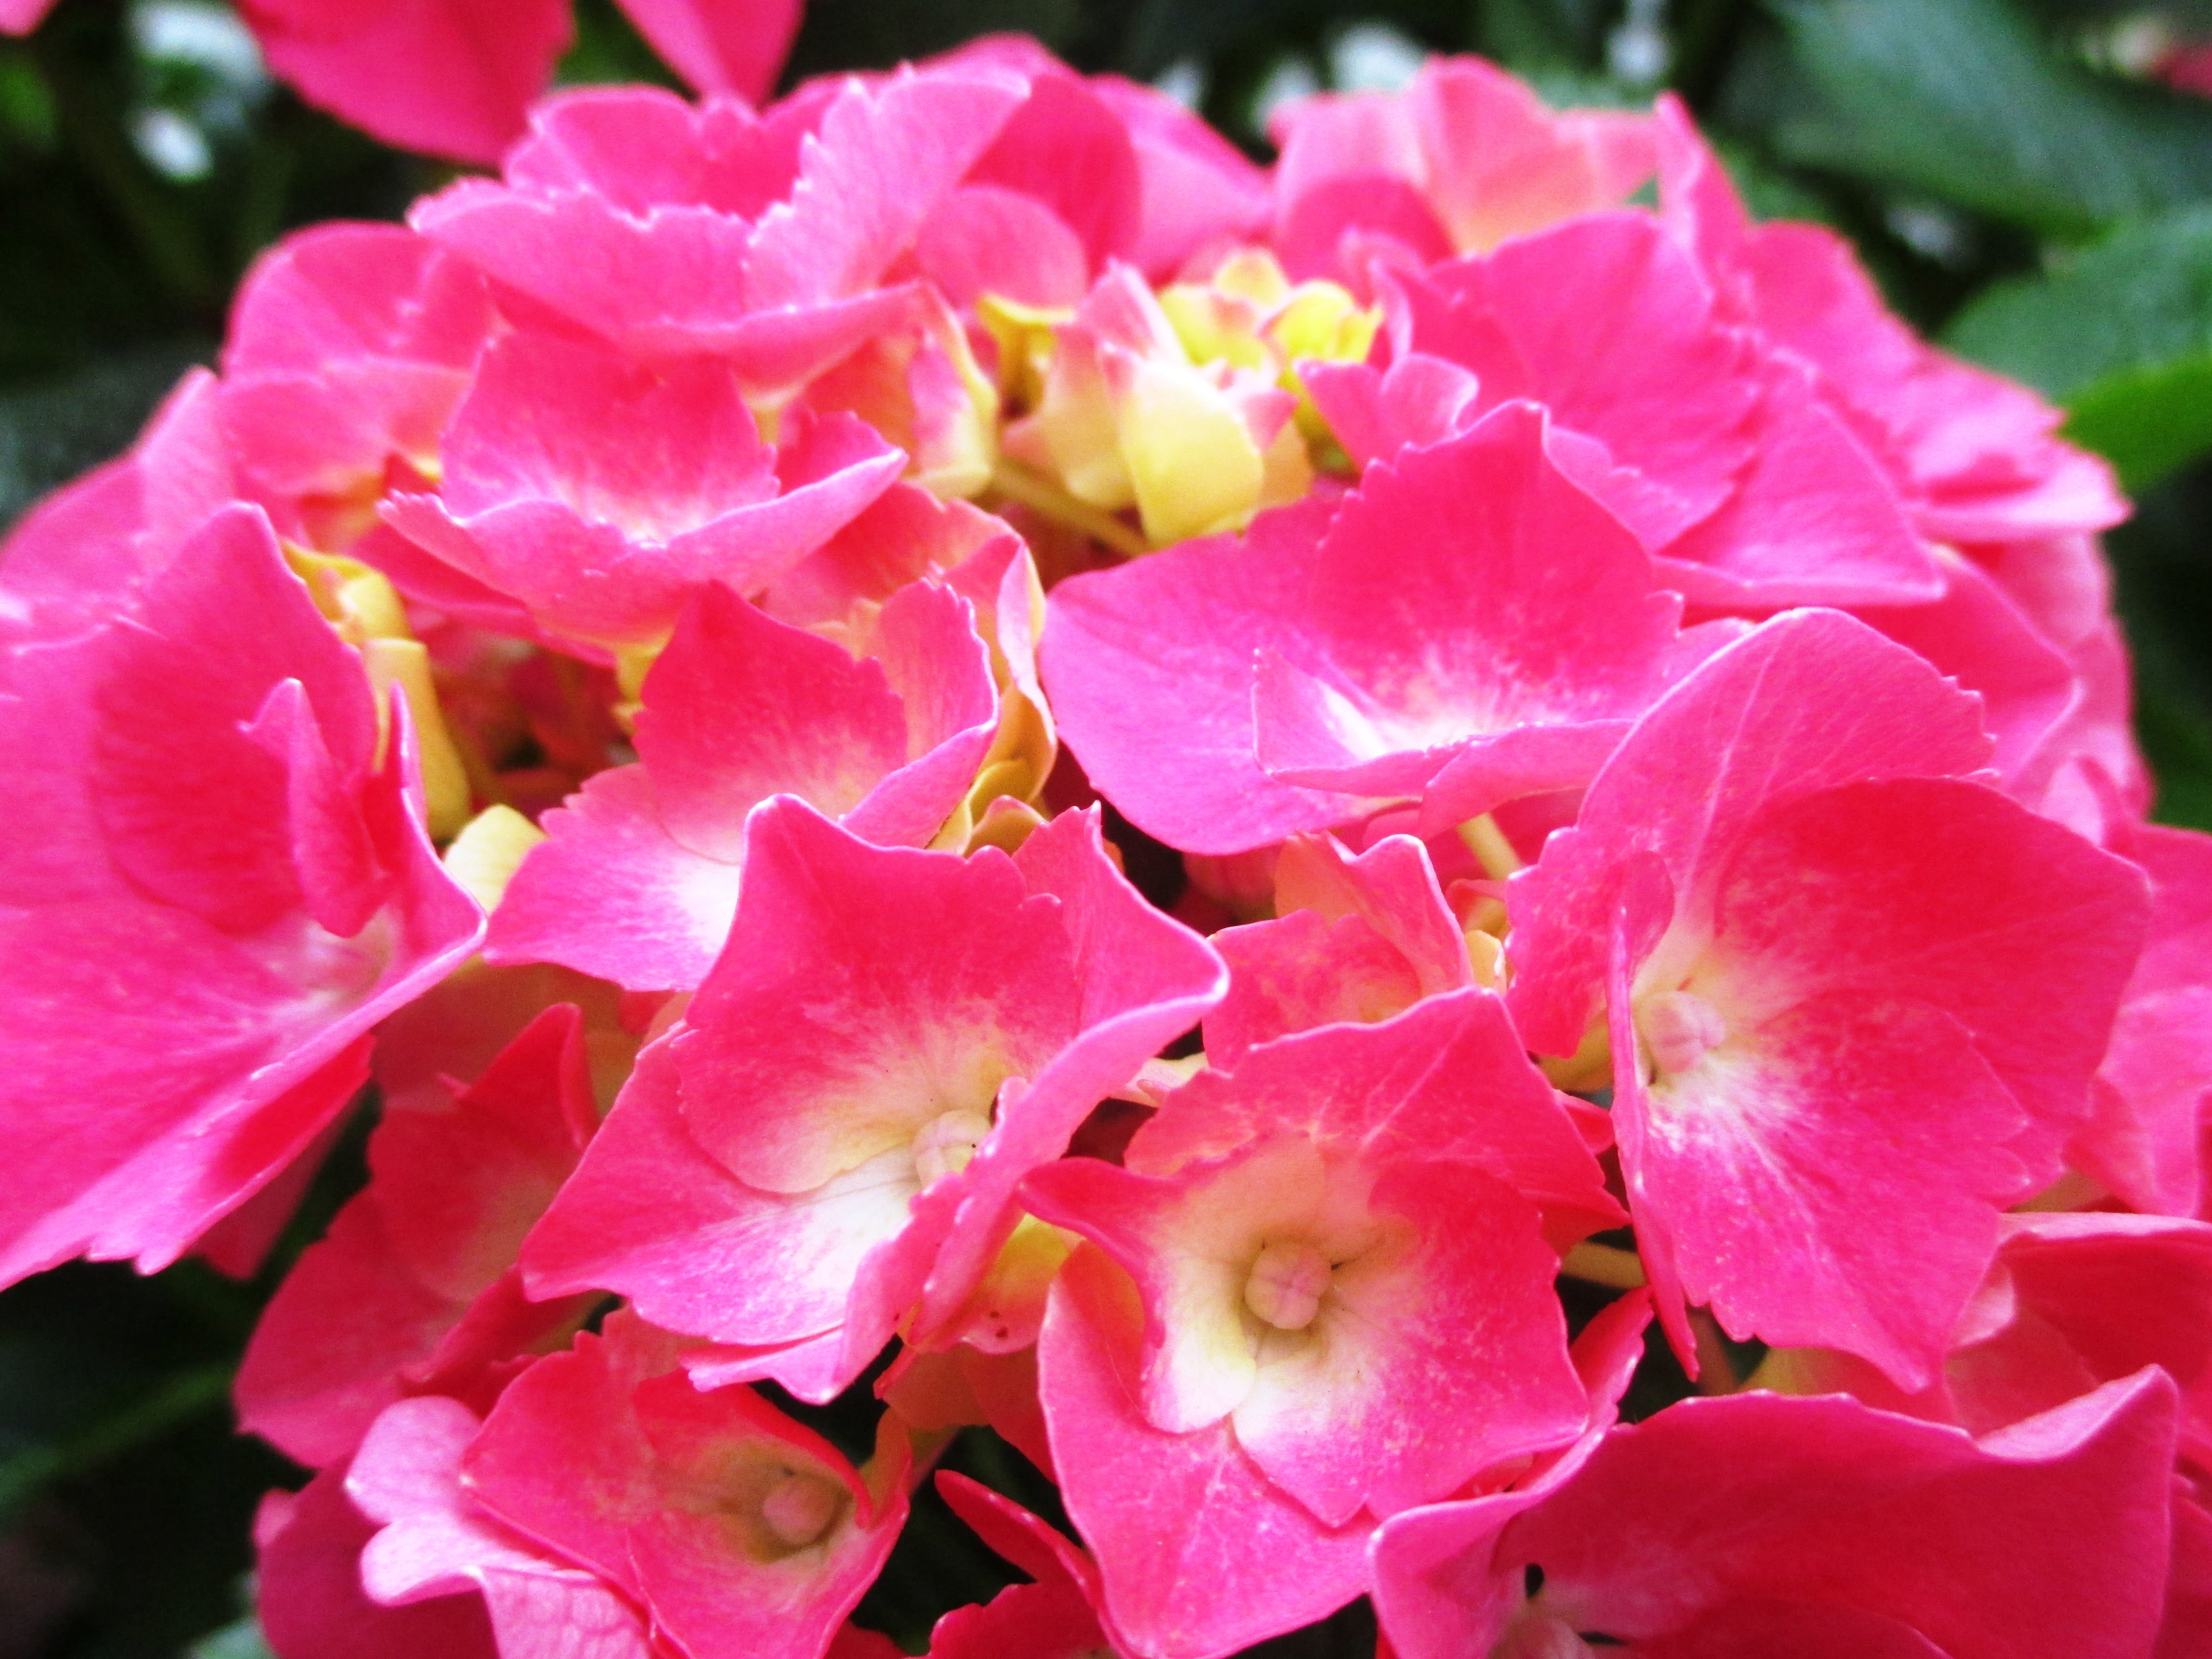 pink hydrangeas in bloom close-up photo